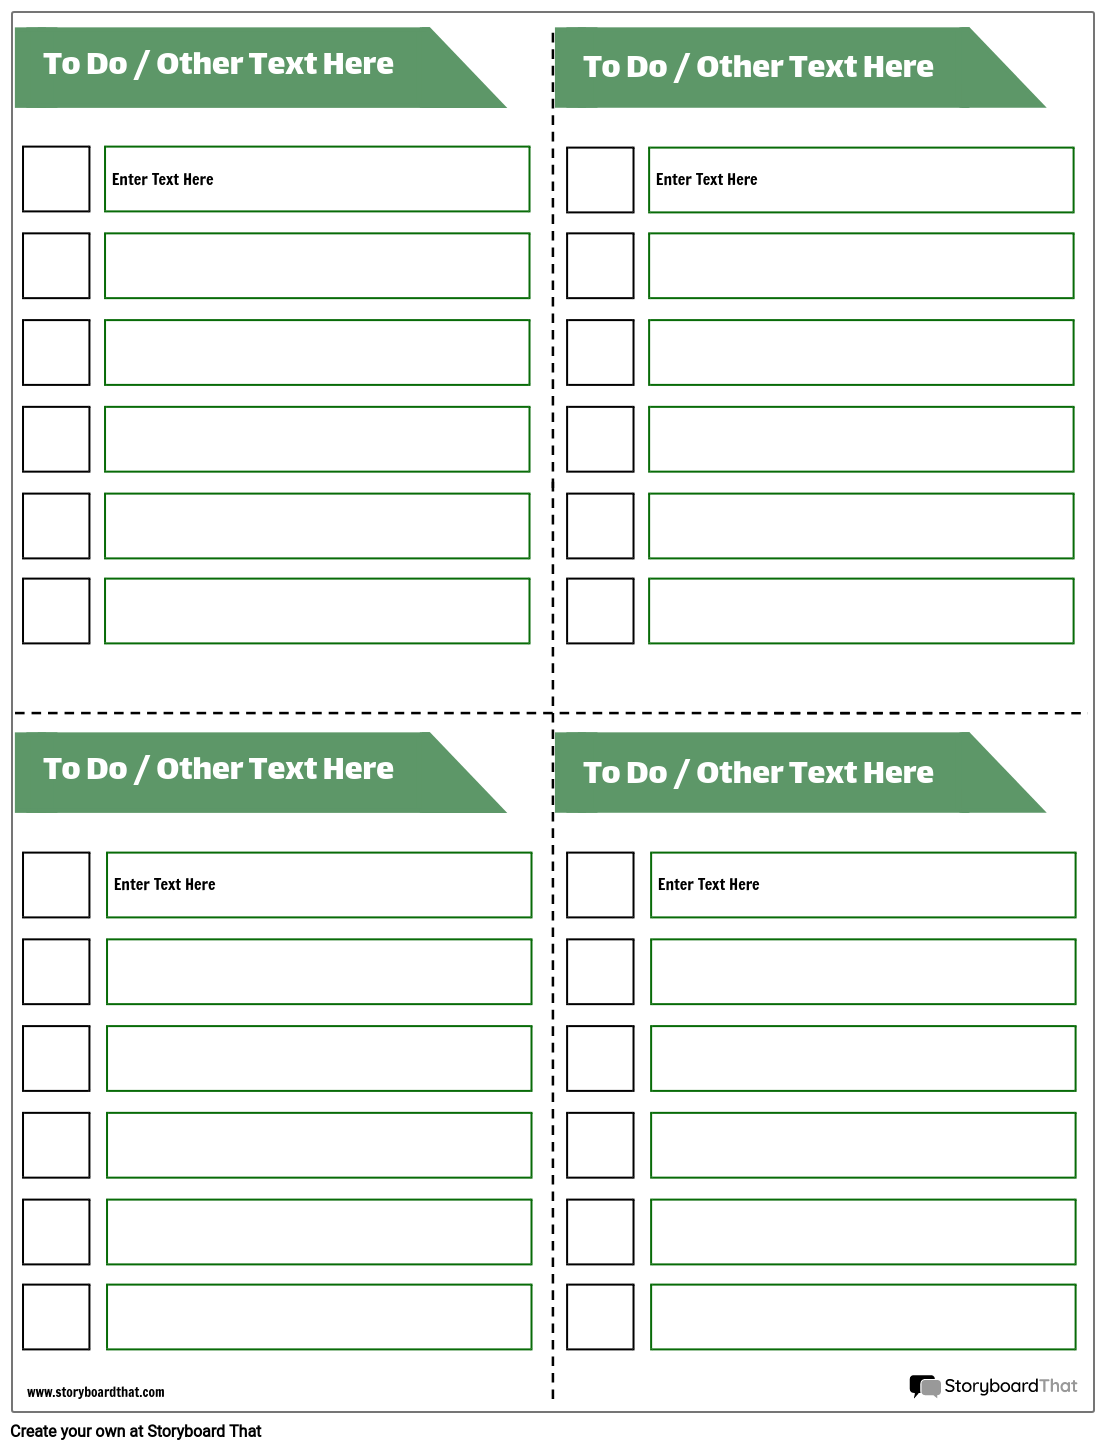 7-free-checklist-form-template-sampletemplatess-7f2